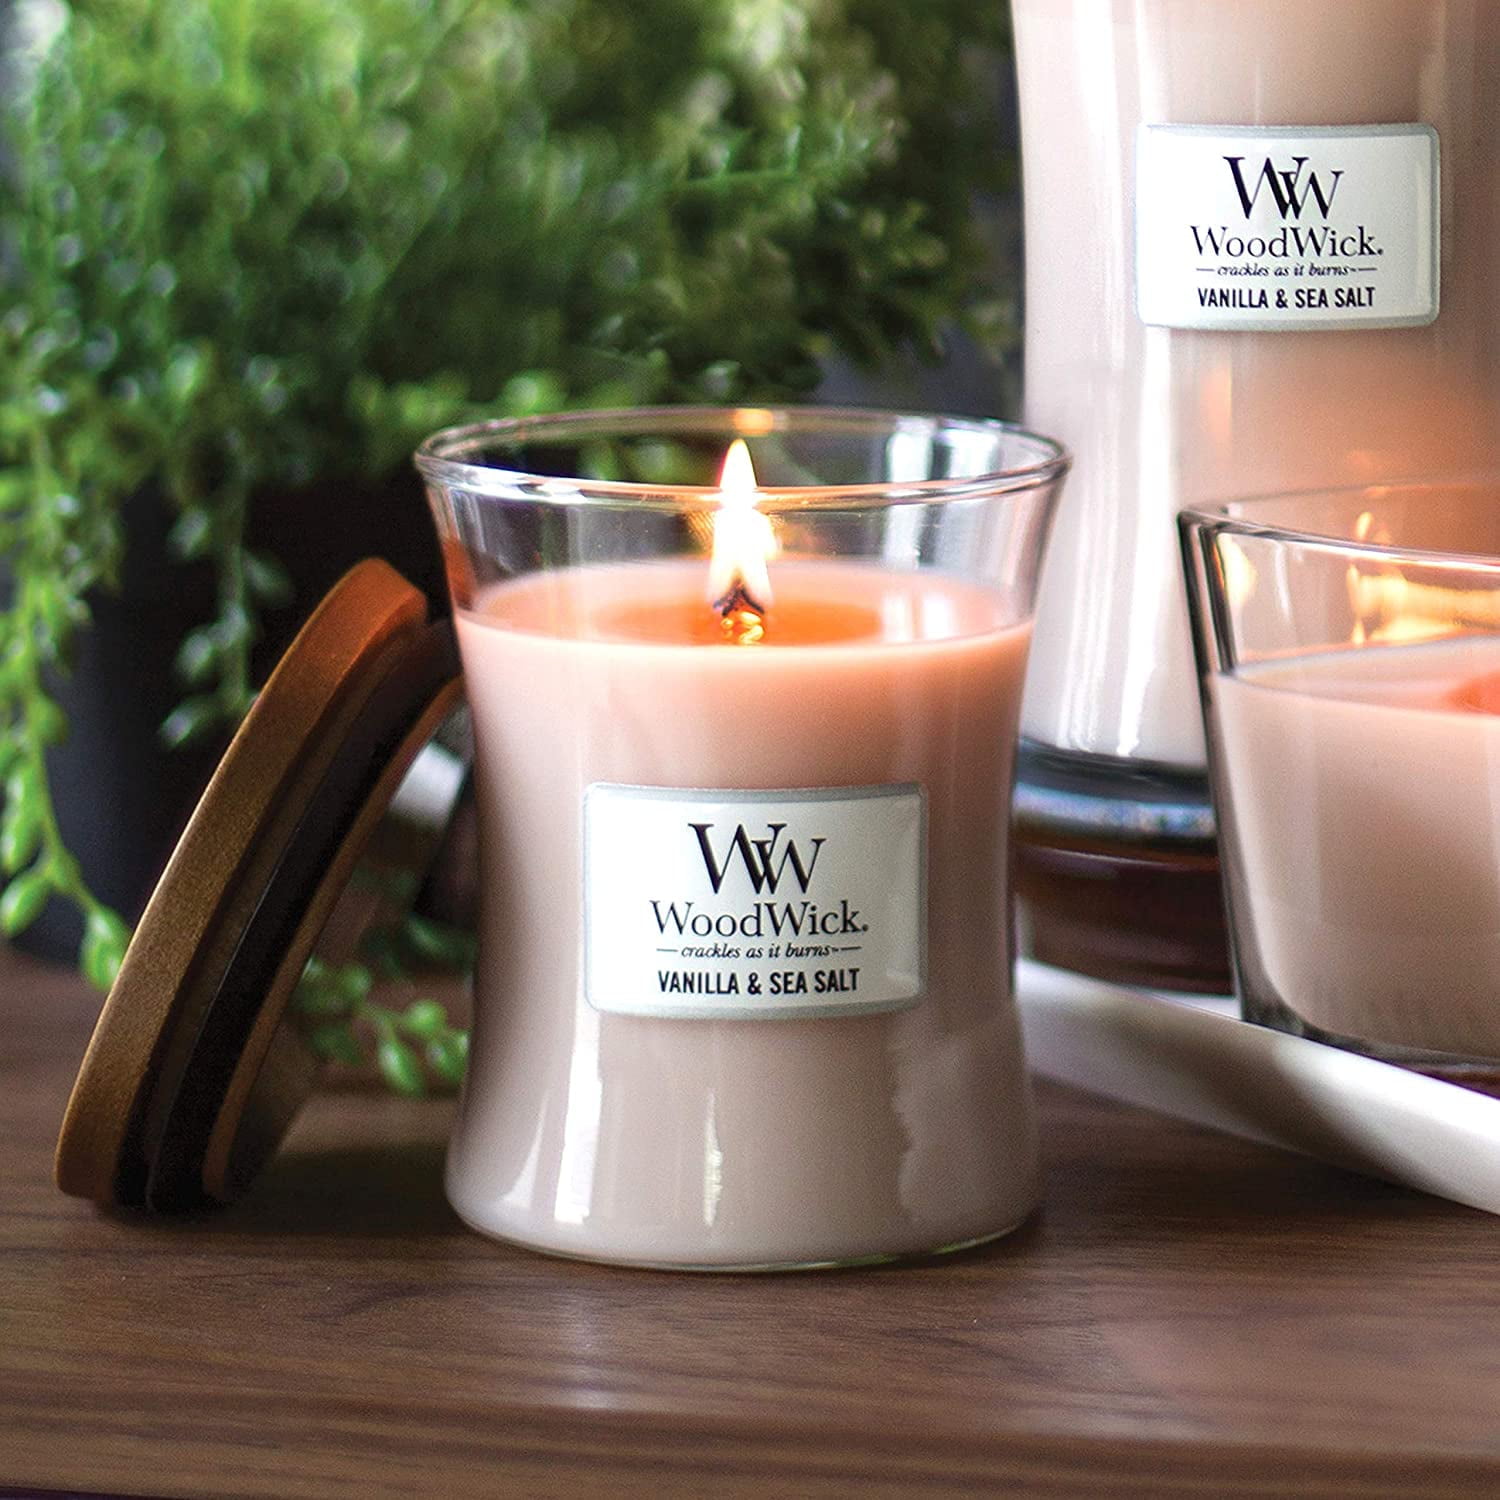 Woodwick Candle, Vanilla & Sea Salt - 9.7 oz